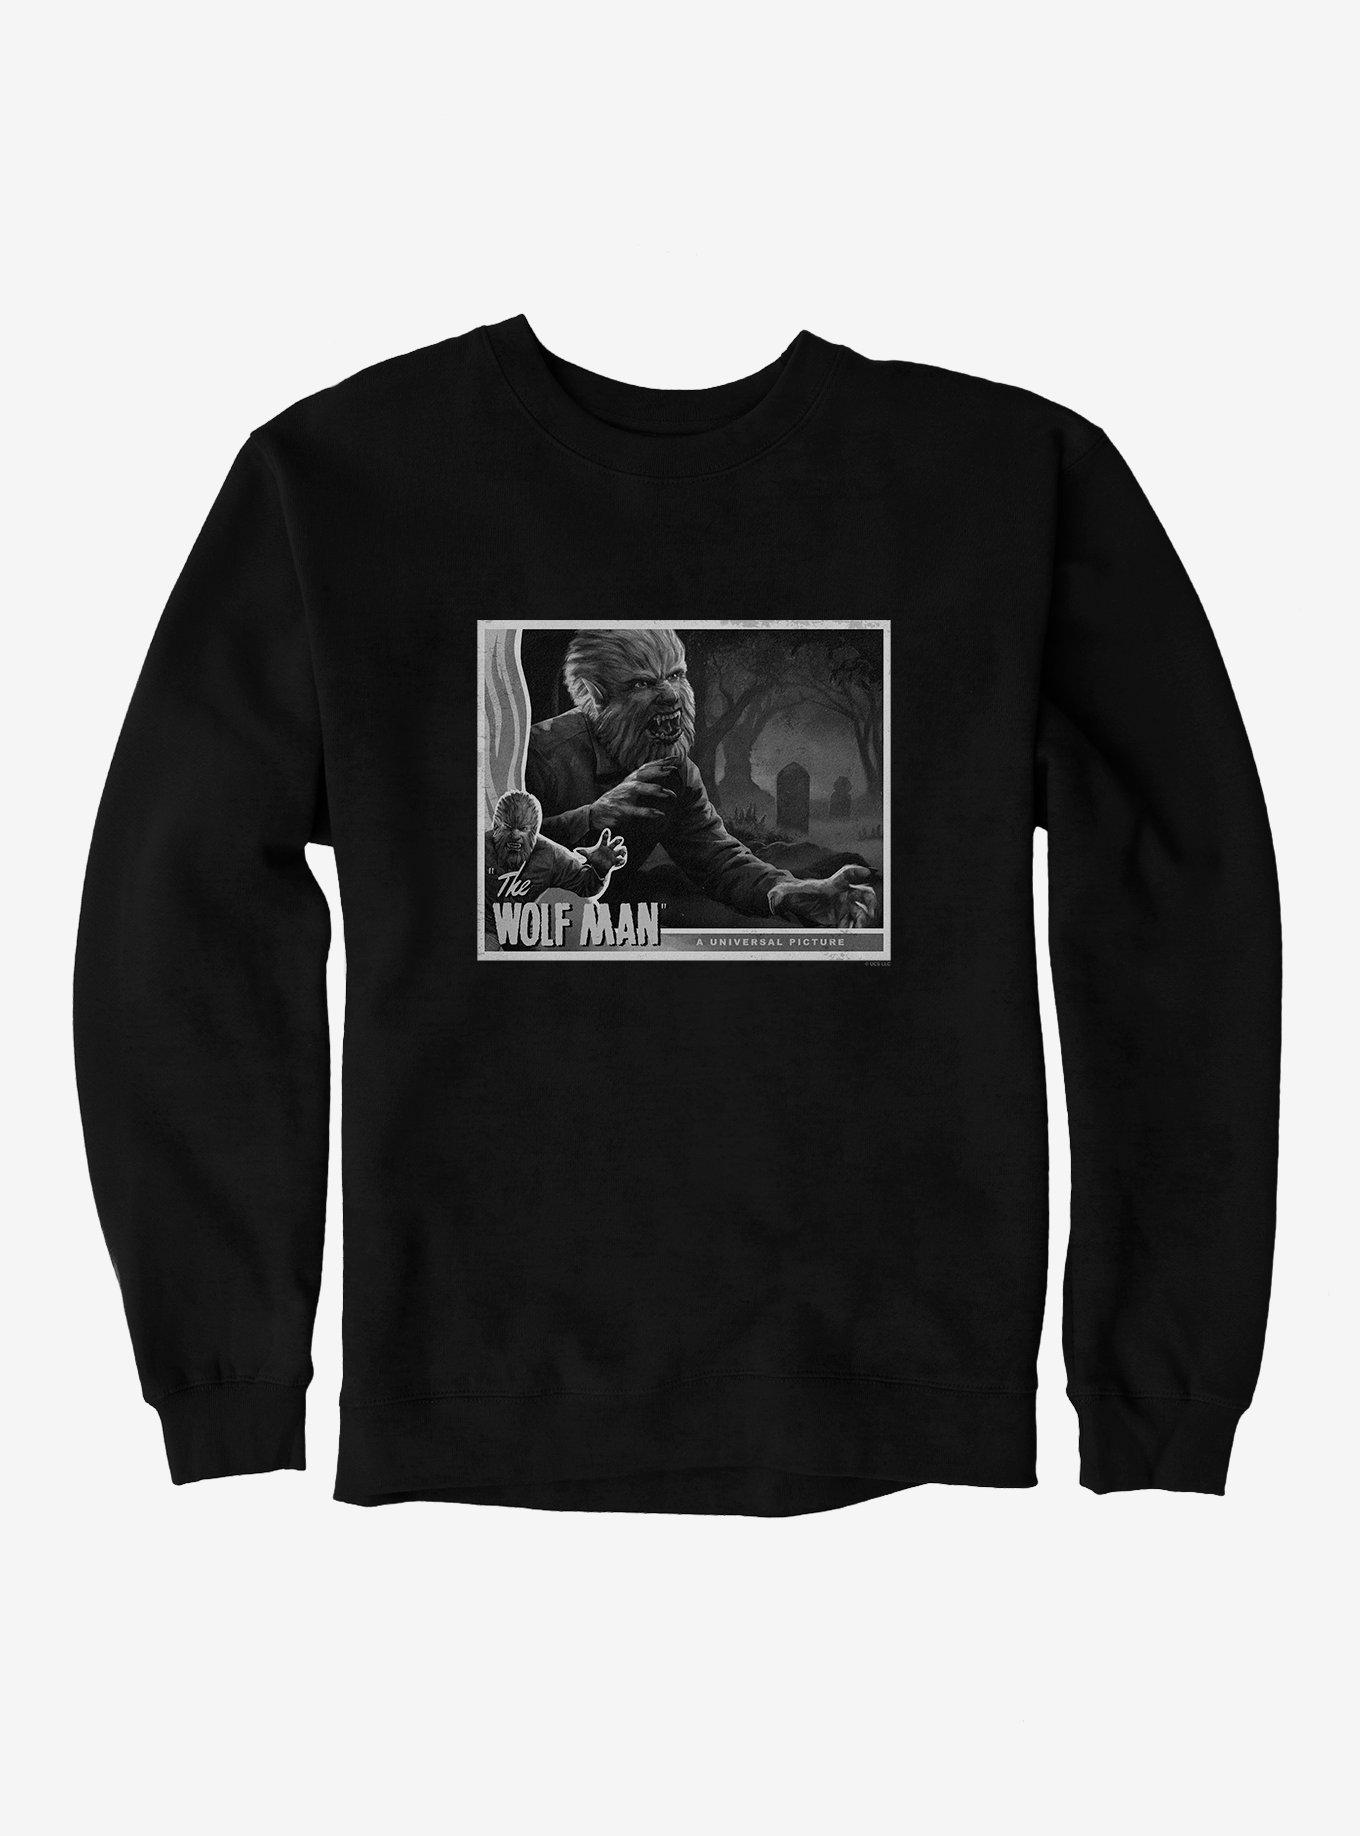 The Wolf Man Black And White Movie Poster Sweatshirt